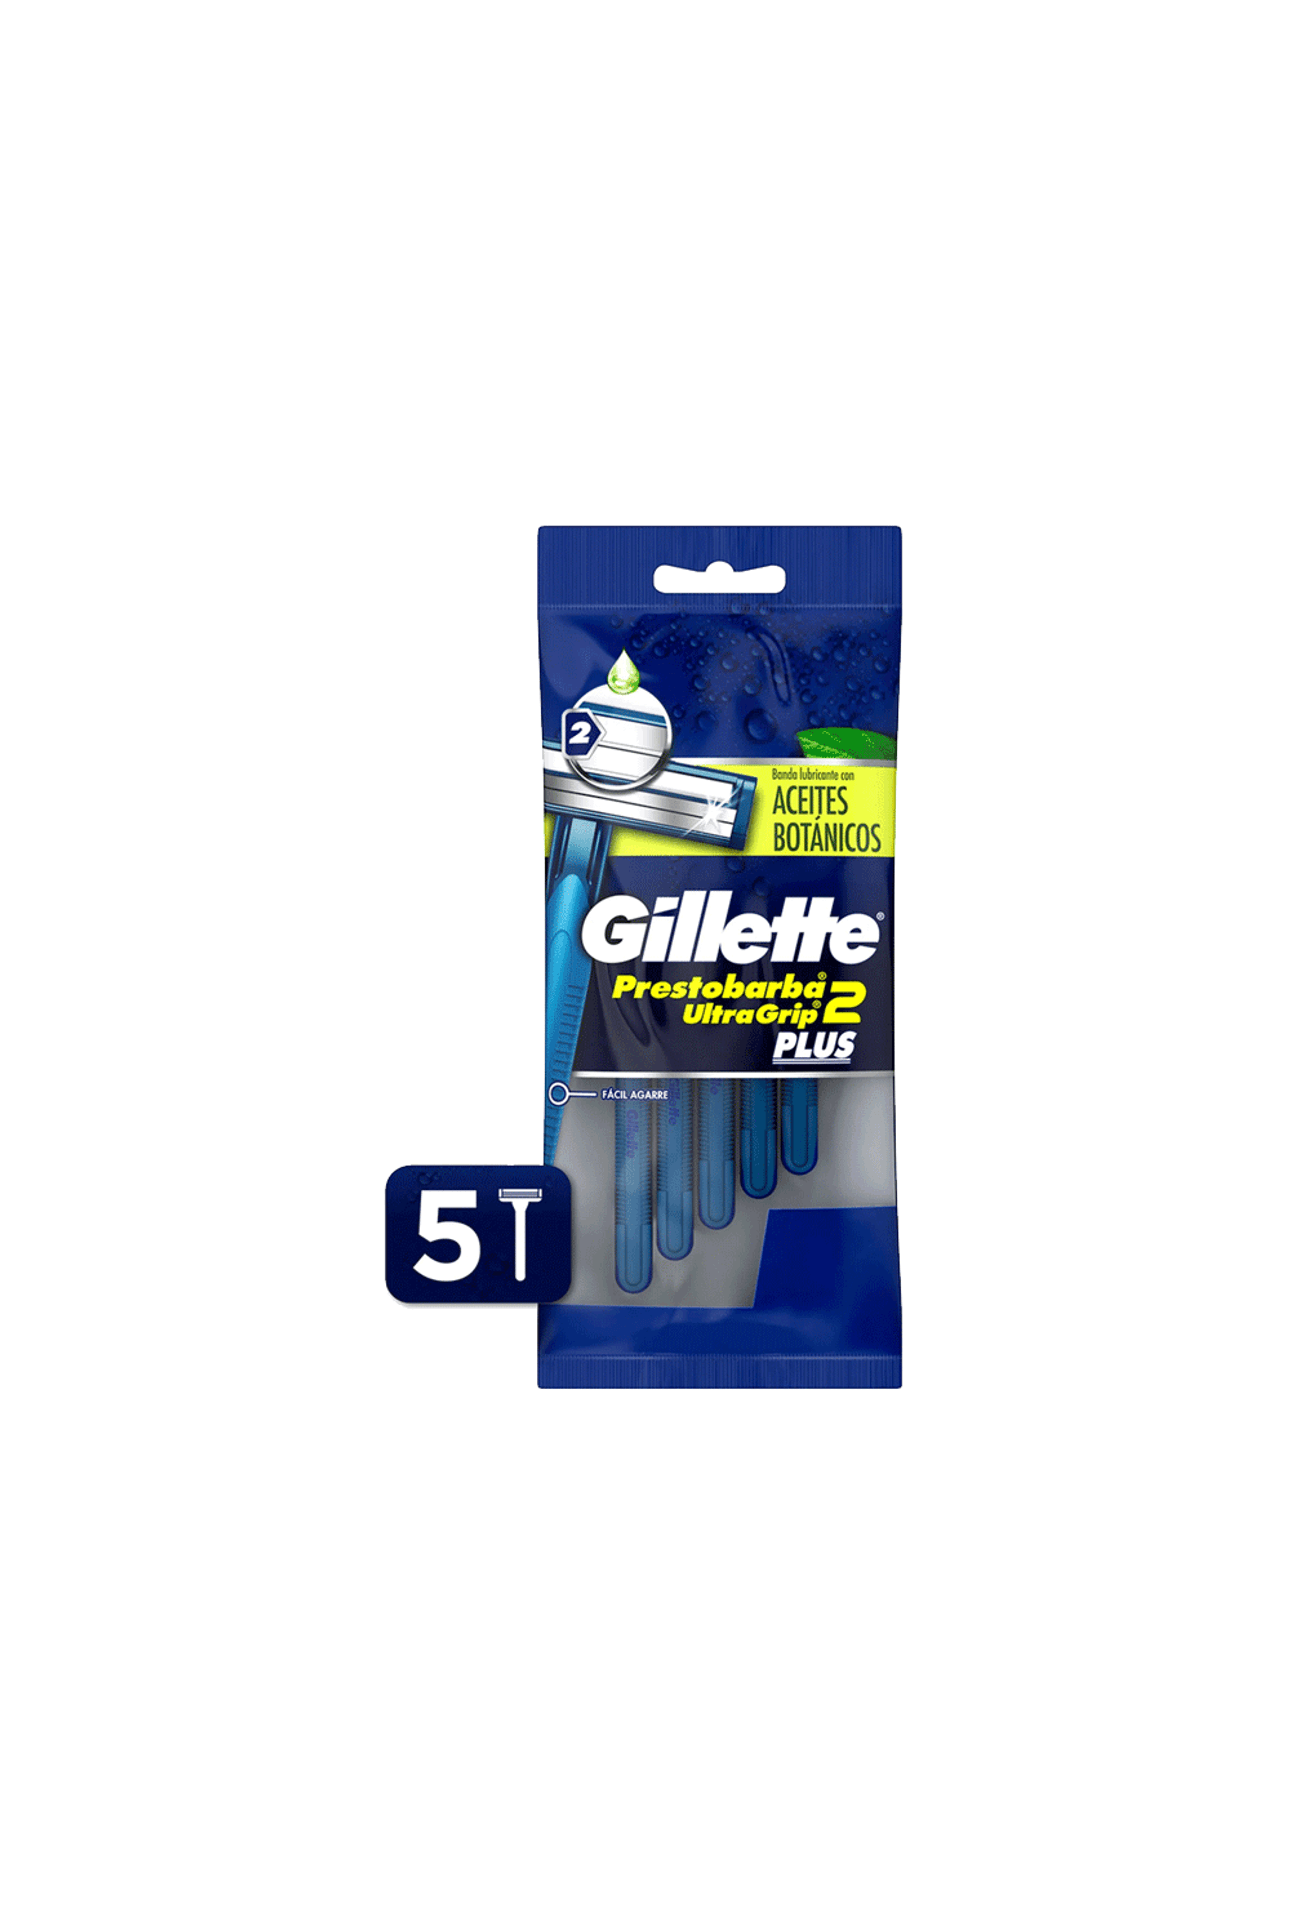 Gillette-Maquina-De-Afeitar-Gillette-Ultragrip-Plus-x-5-uni-7500435198721_img1